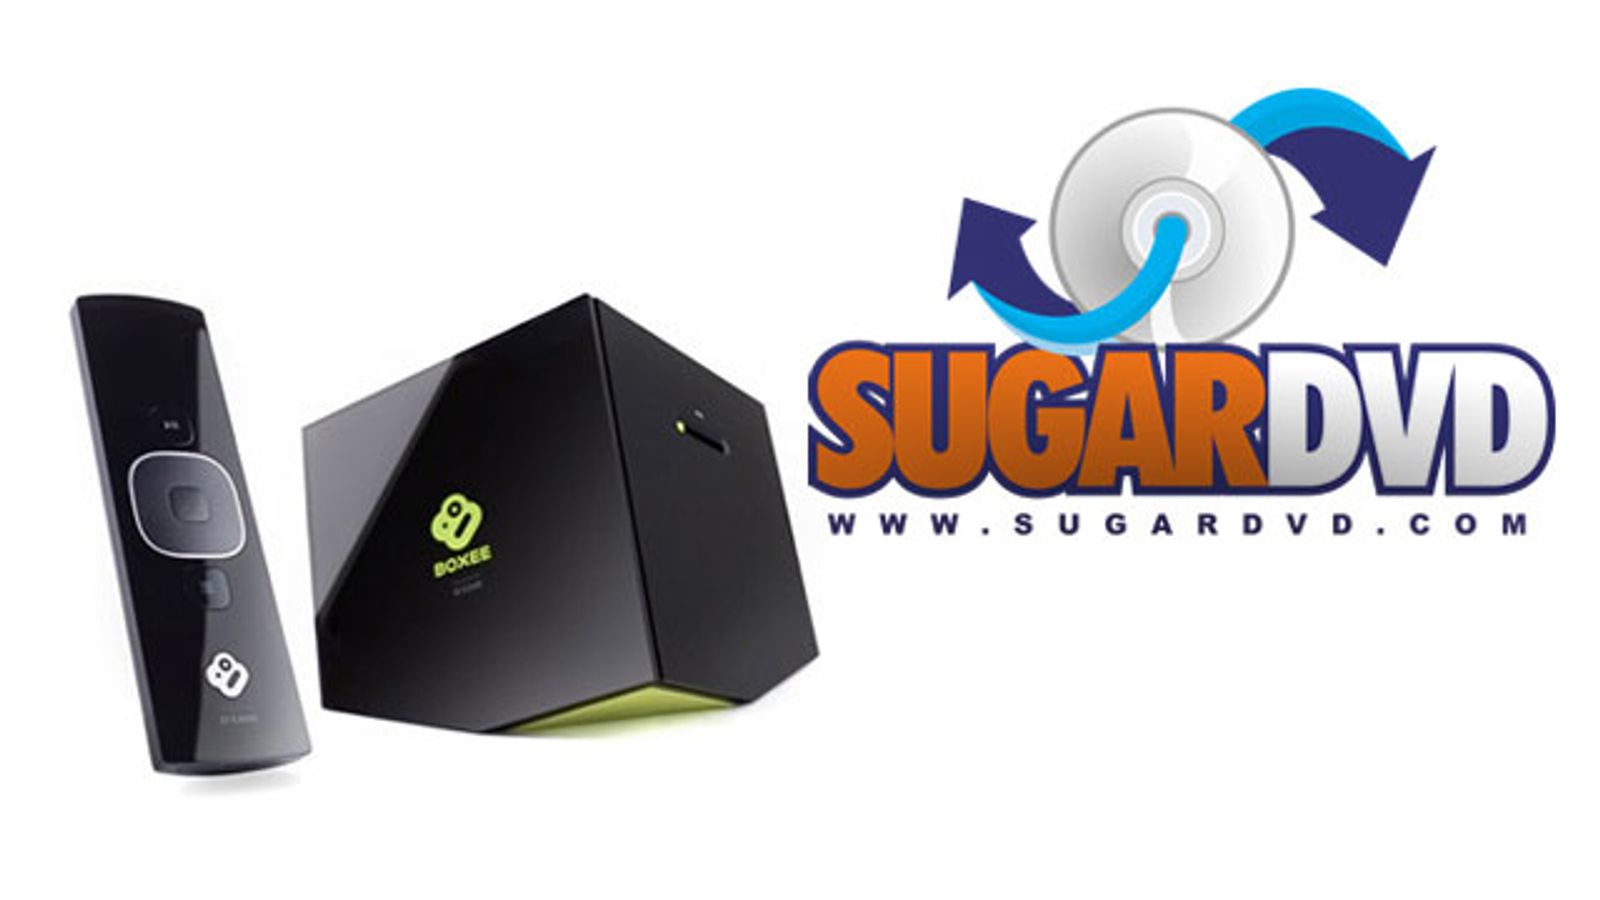 SugarDVD Launches Stream-to-TV Boxee App